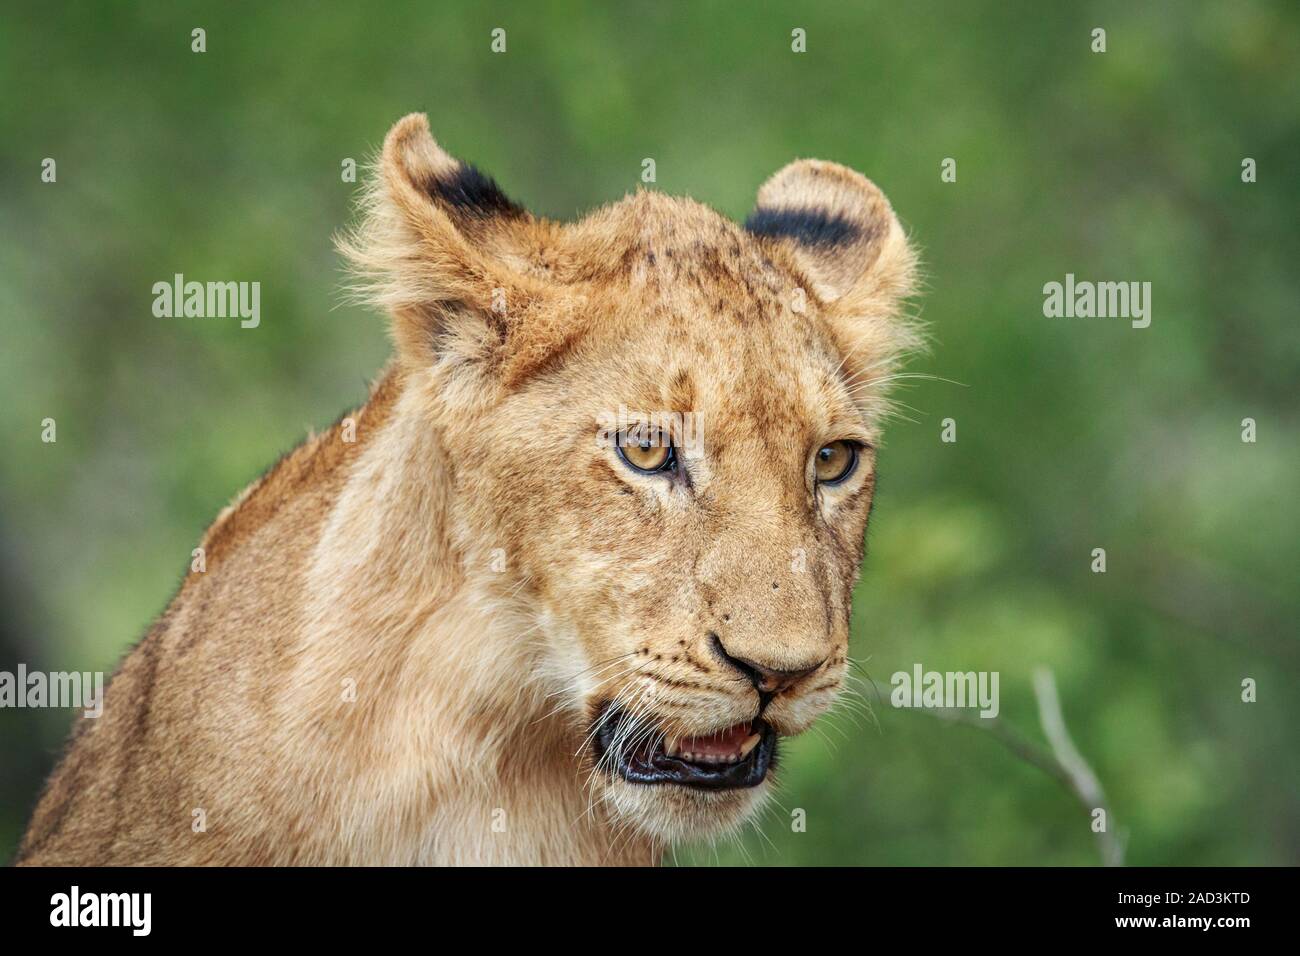 Lion Cub. Stockfoto